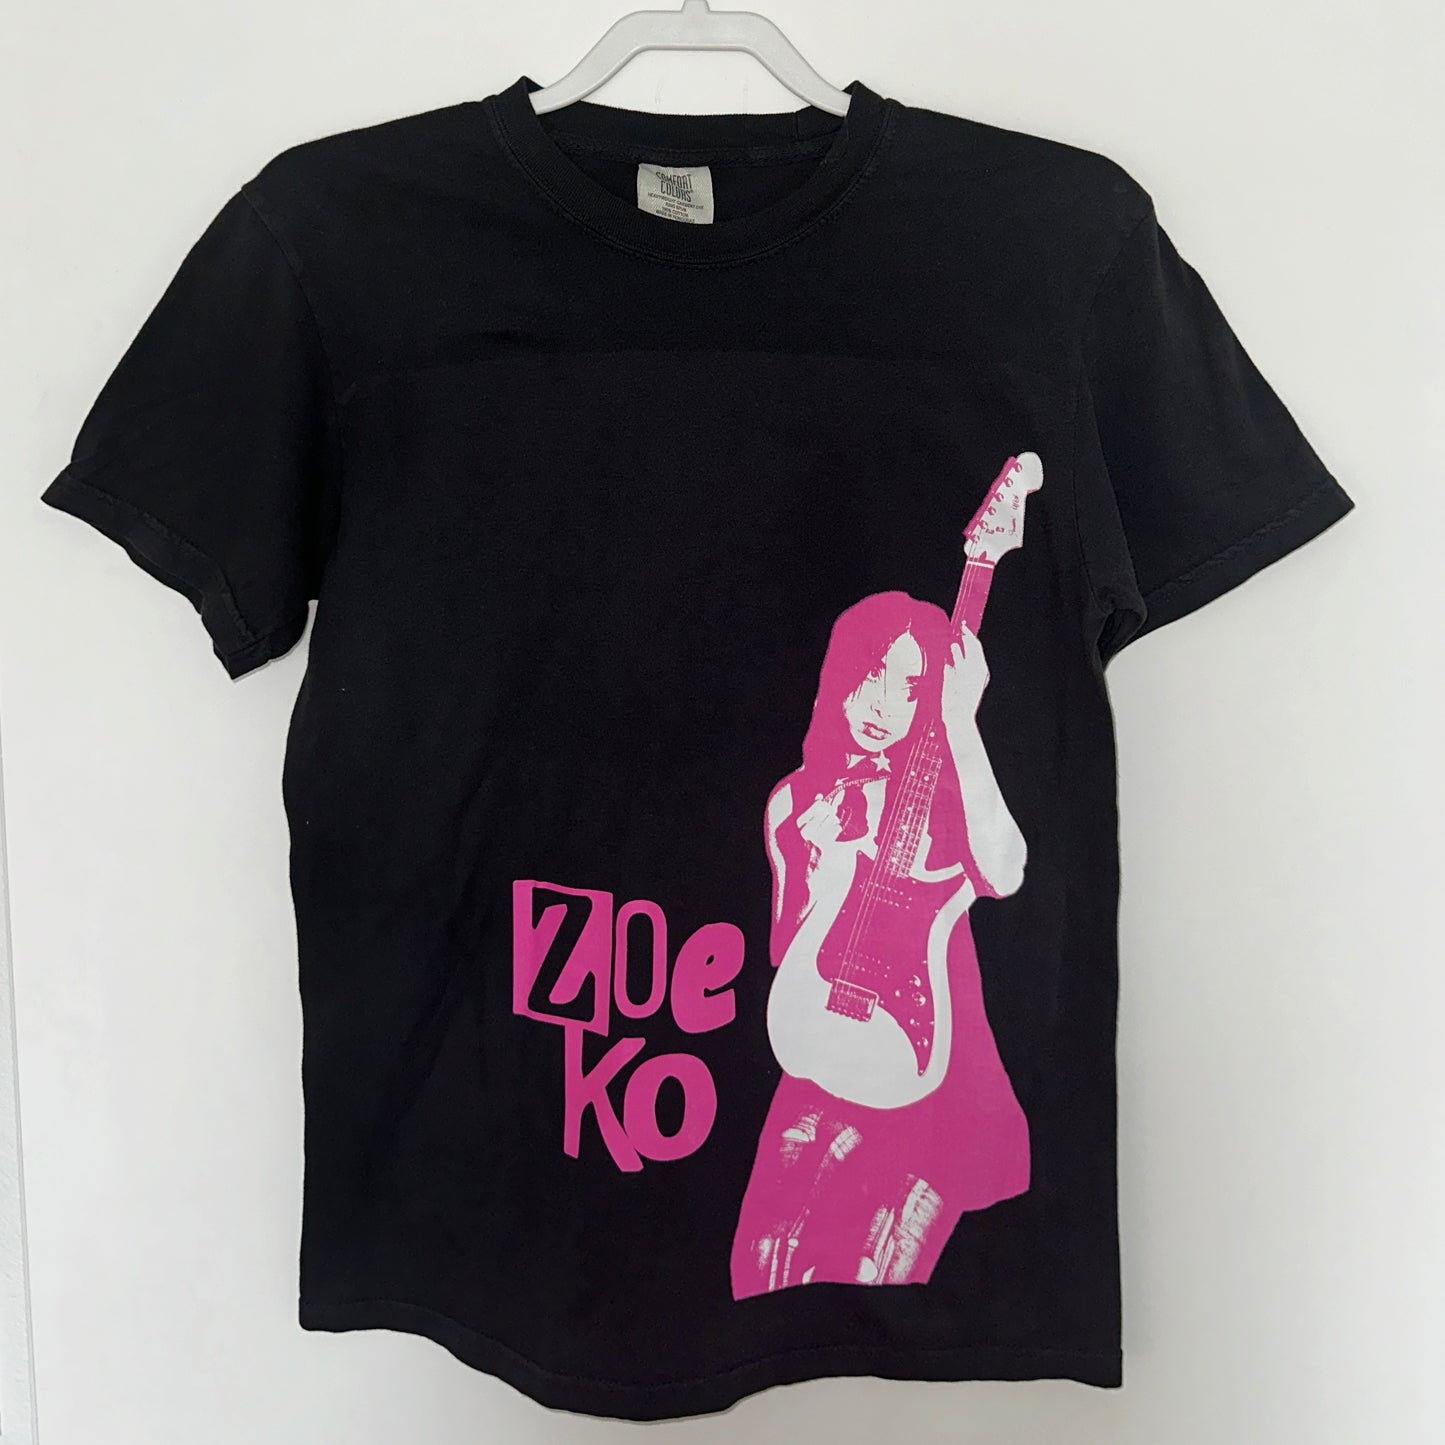 ZK PINK T-Shirt